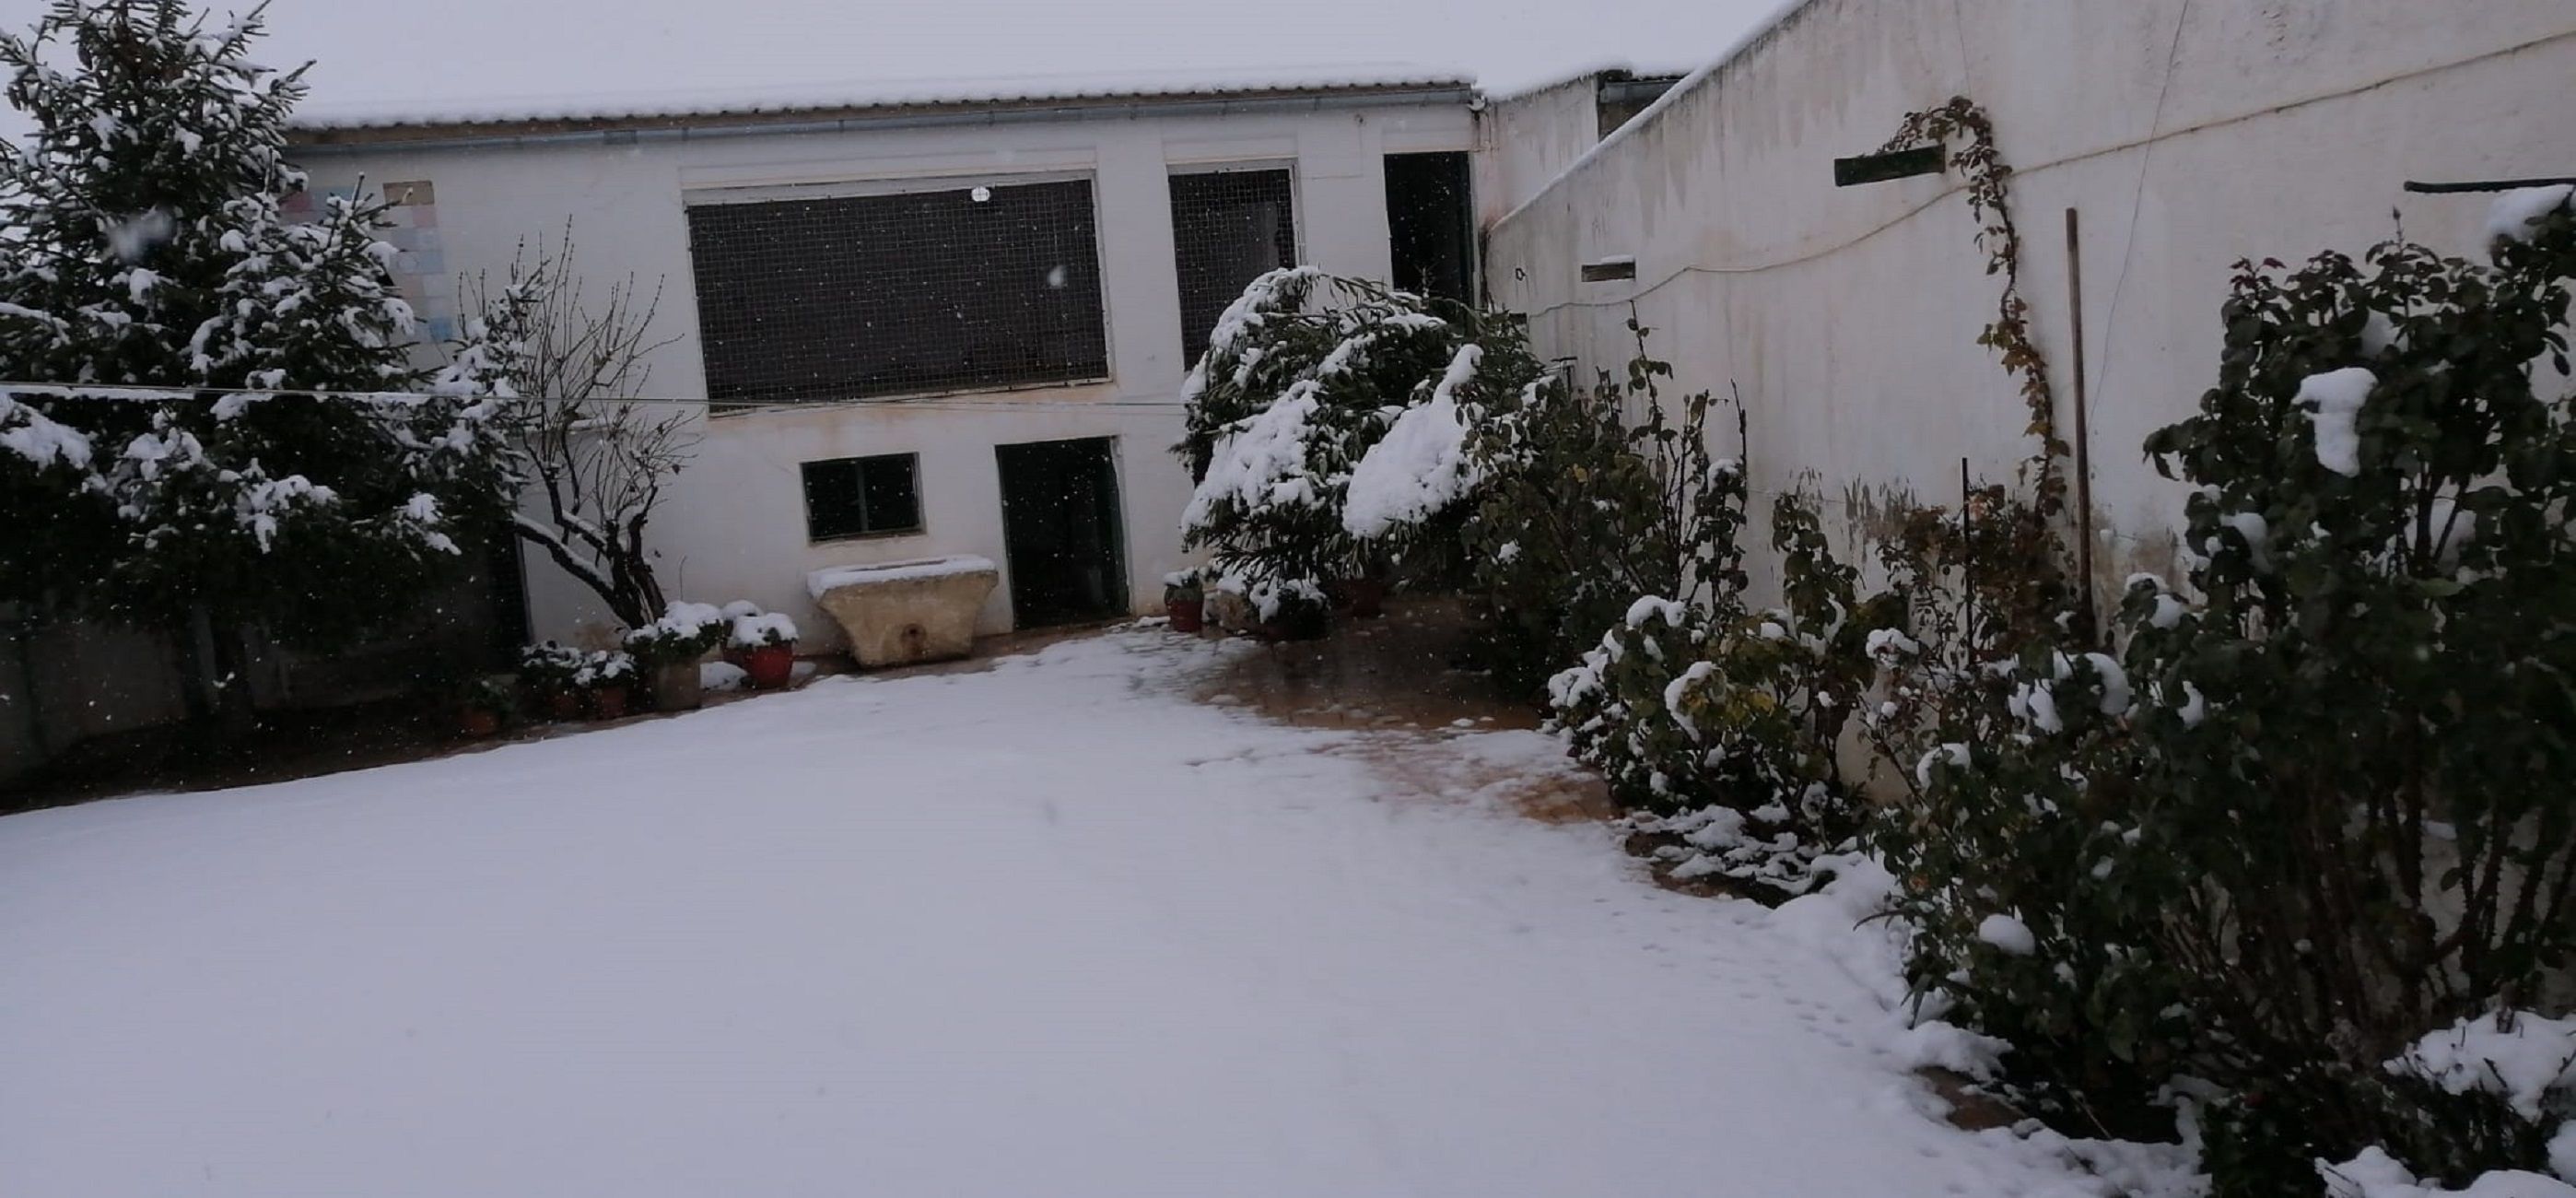 Nieve Montealegre / Cedida